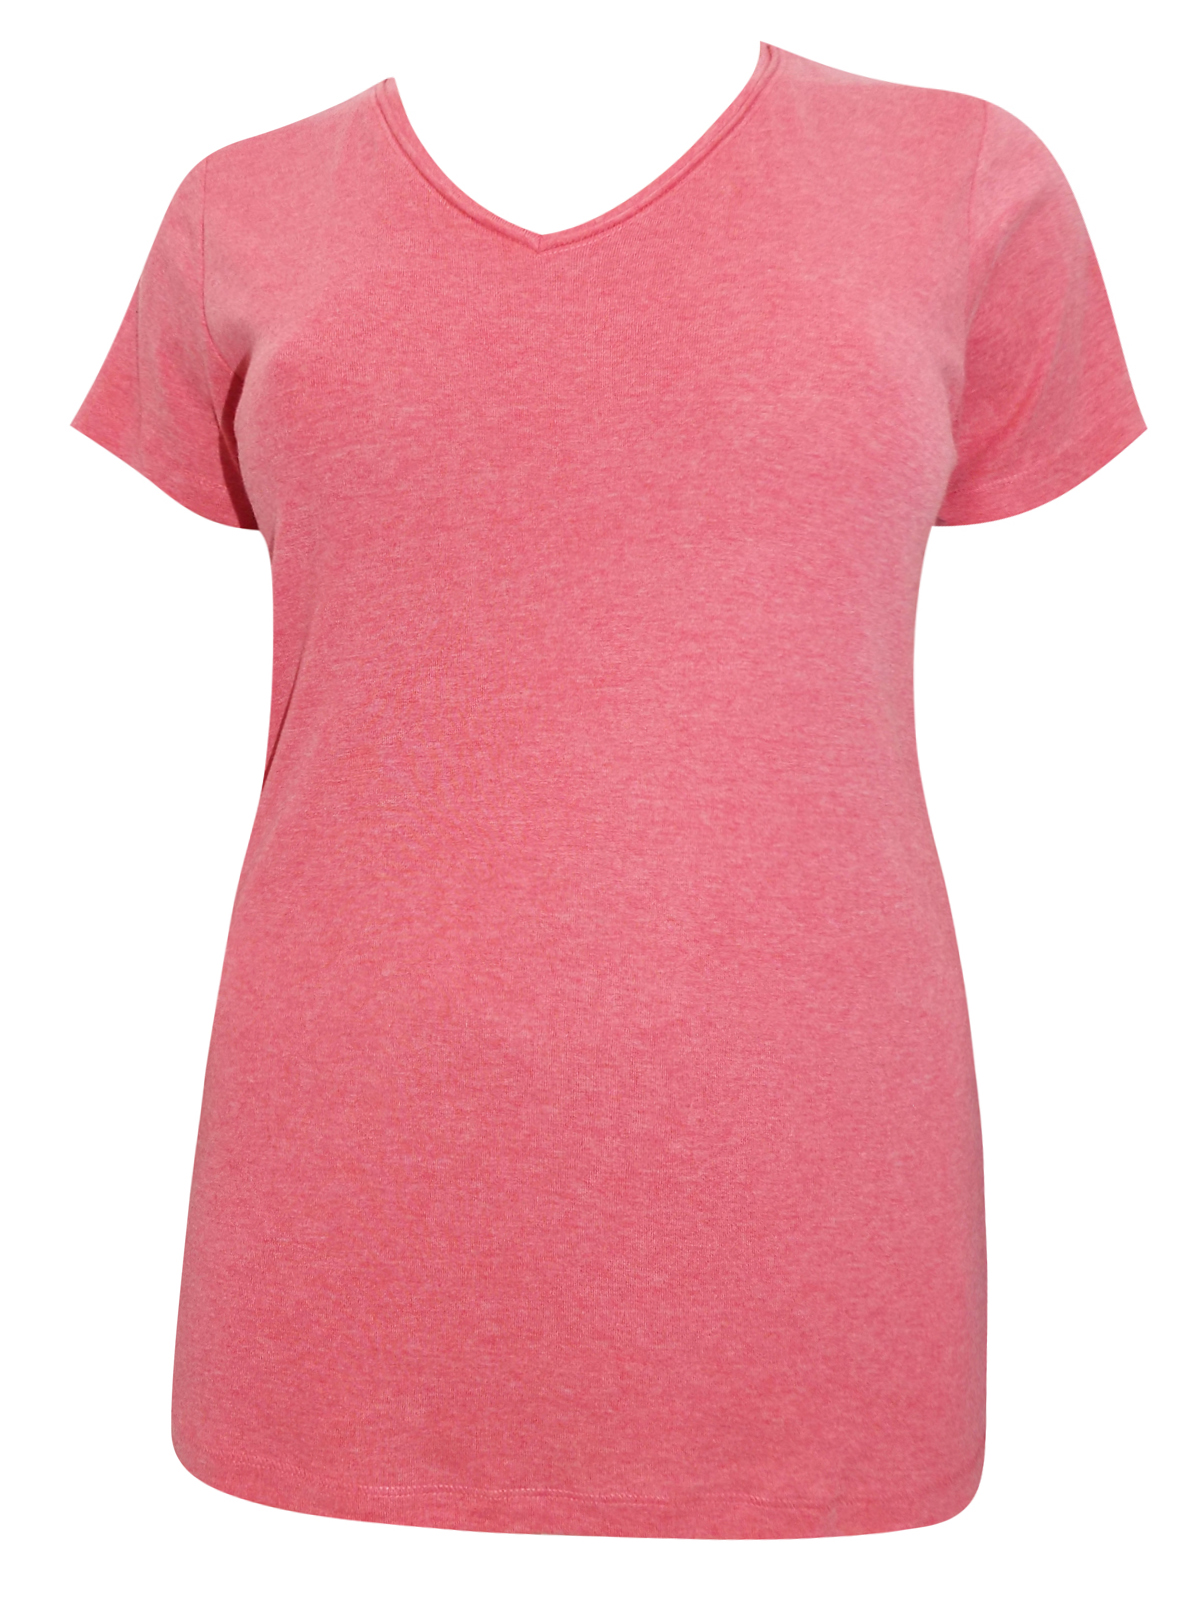 CURVE - - ROSE Pure Cotton V-Neck Short Sleeve T-Shirt - Plus Size 20 to 34